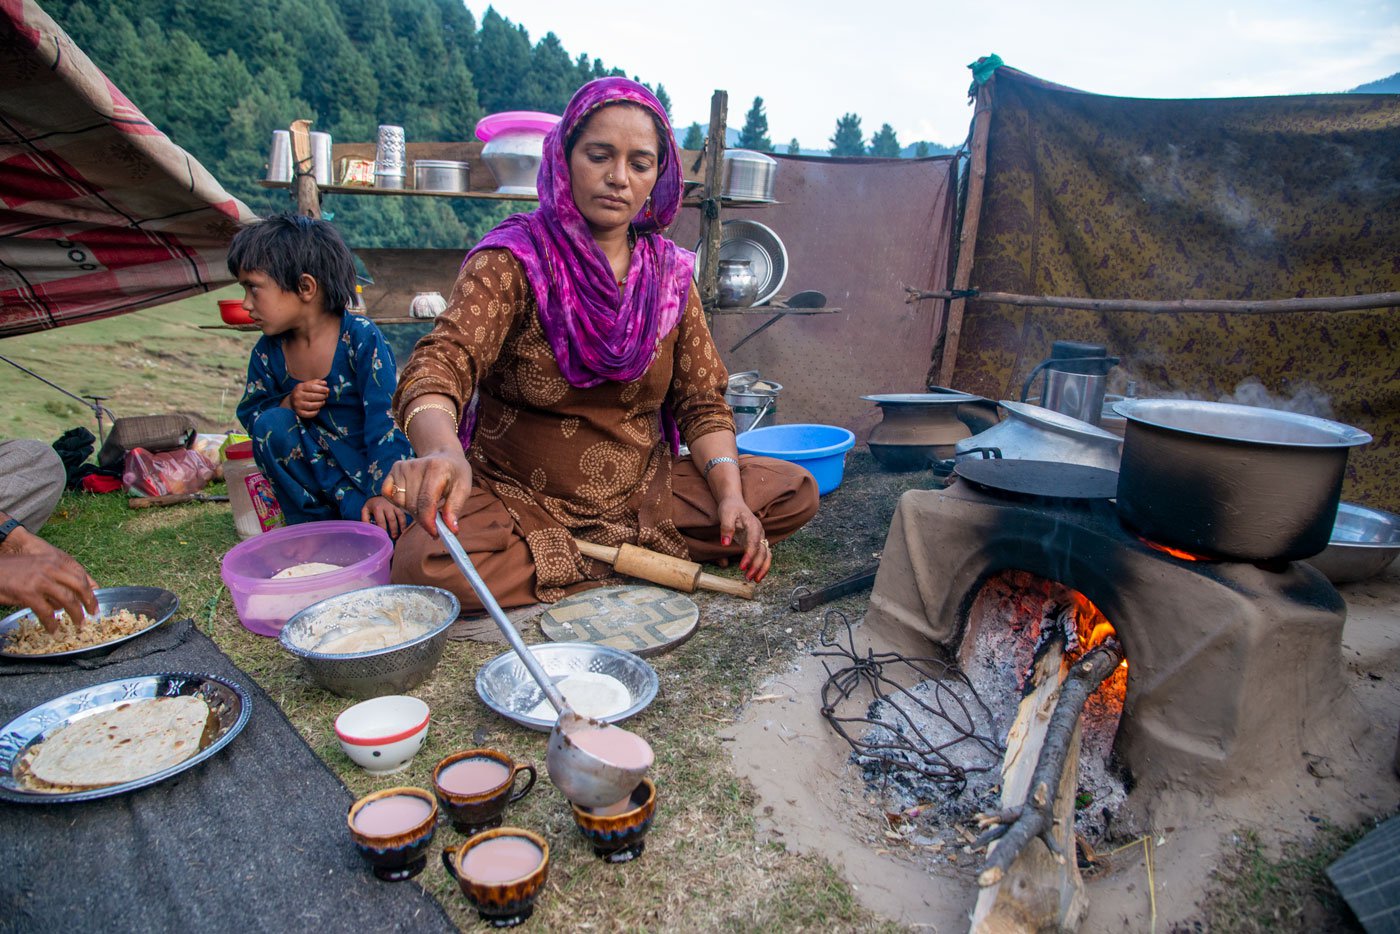 In her makeshift camp, Khalda Begum serving tea made with goat milk